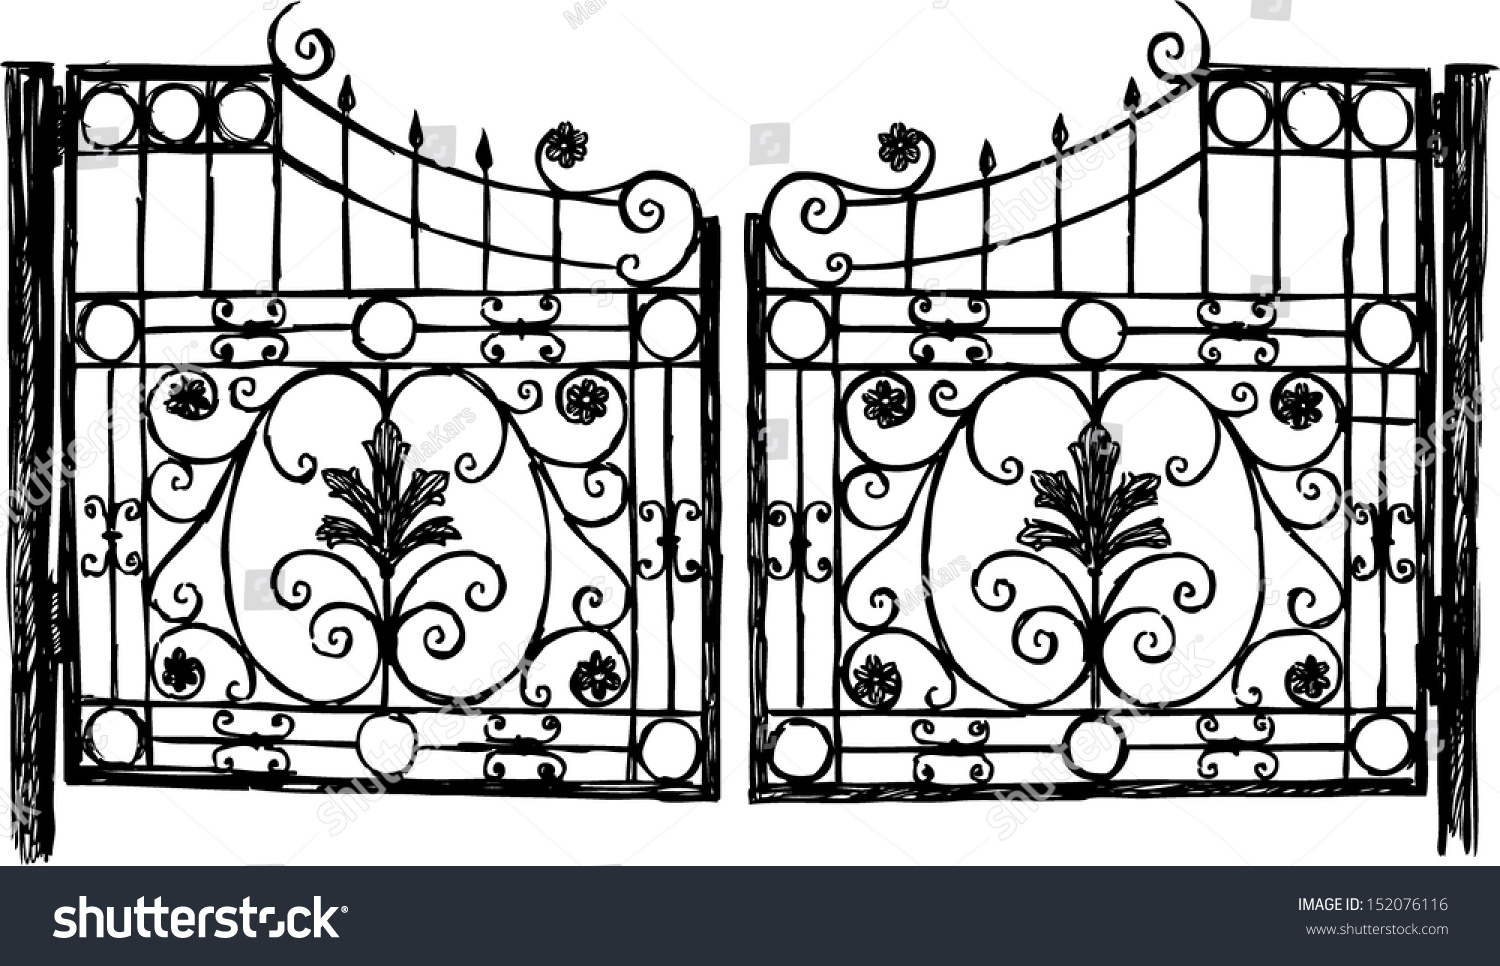 Wrought Iron Gate Stock Vector Illustration 152076116 : Shutterstock